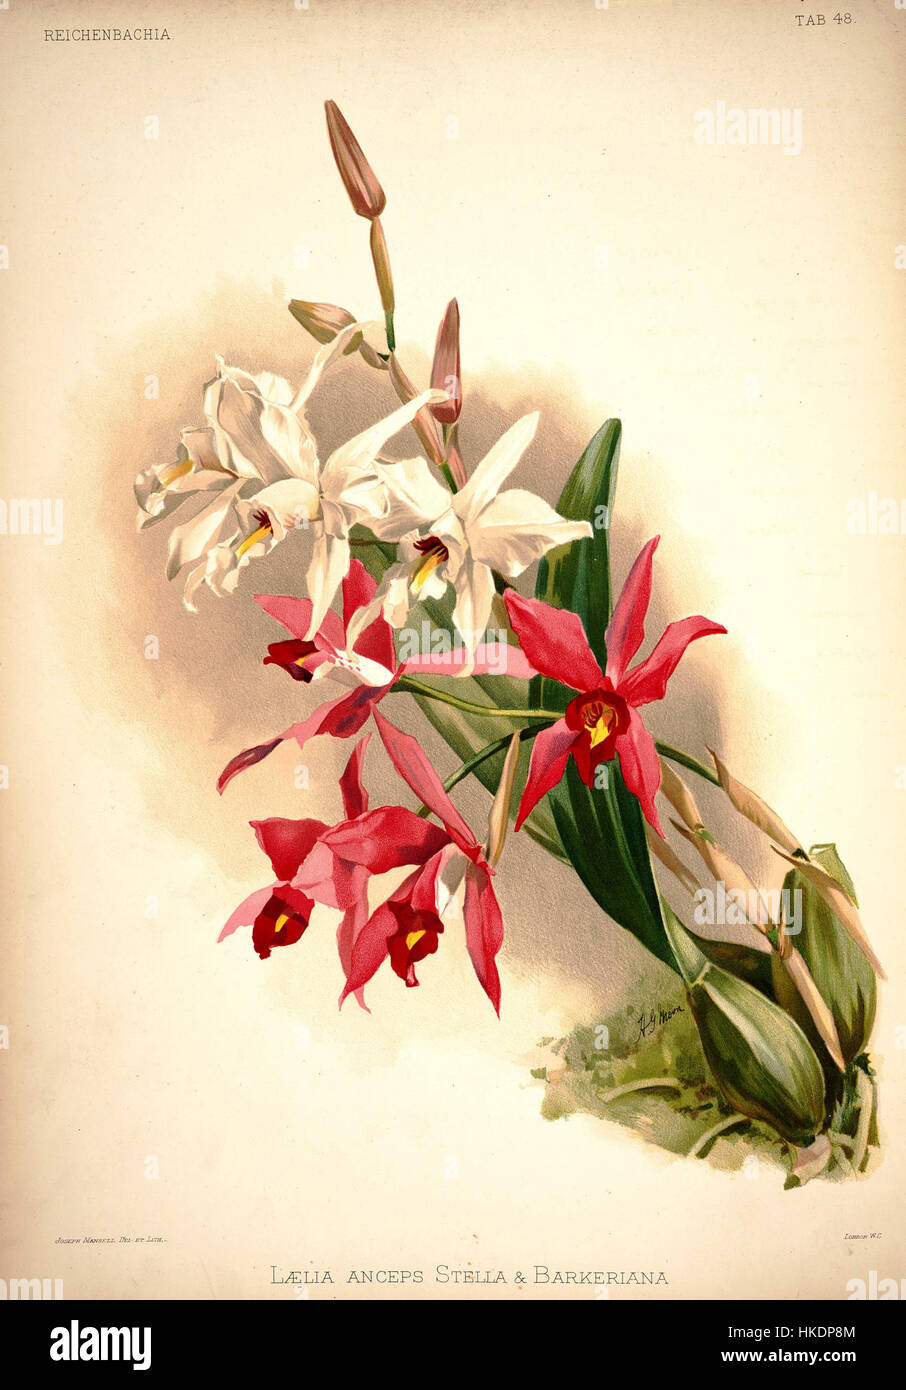 Frederick Sander   Reichenbachia I plate 48 (1888)   Laelia anceps stella   Laelia anceps barkeriana Stock Photo